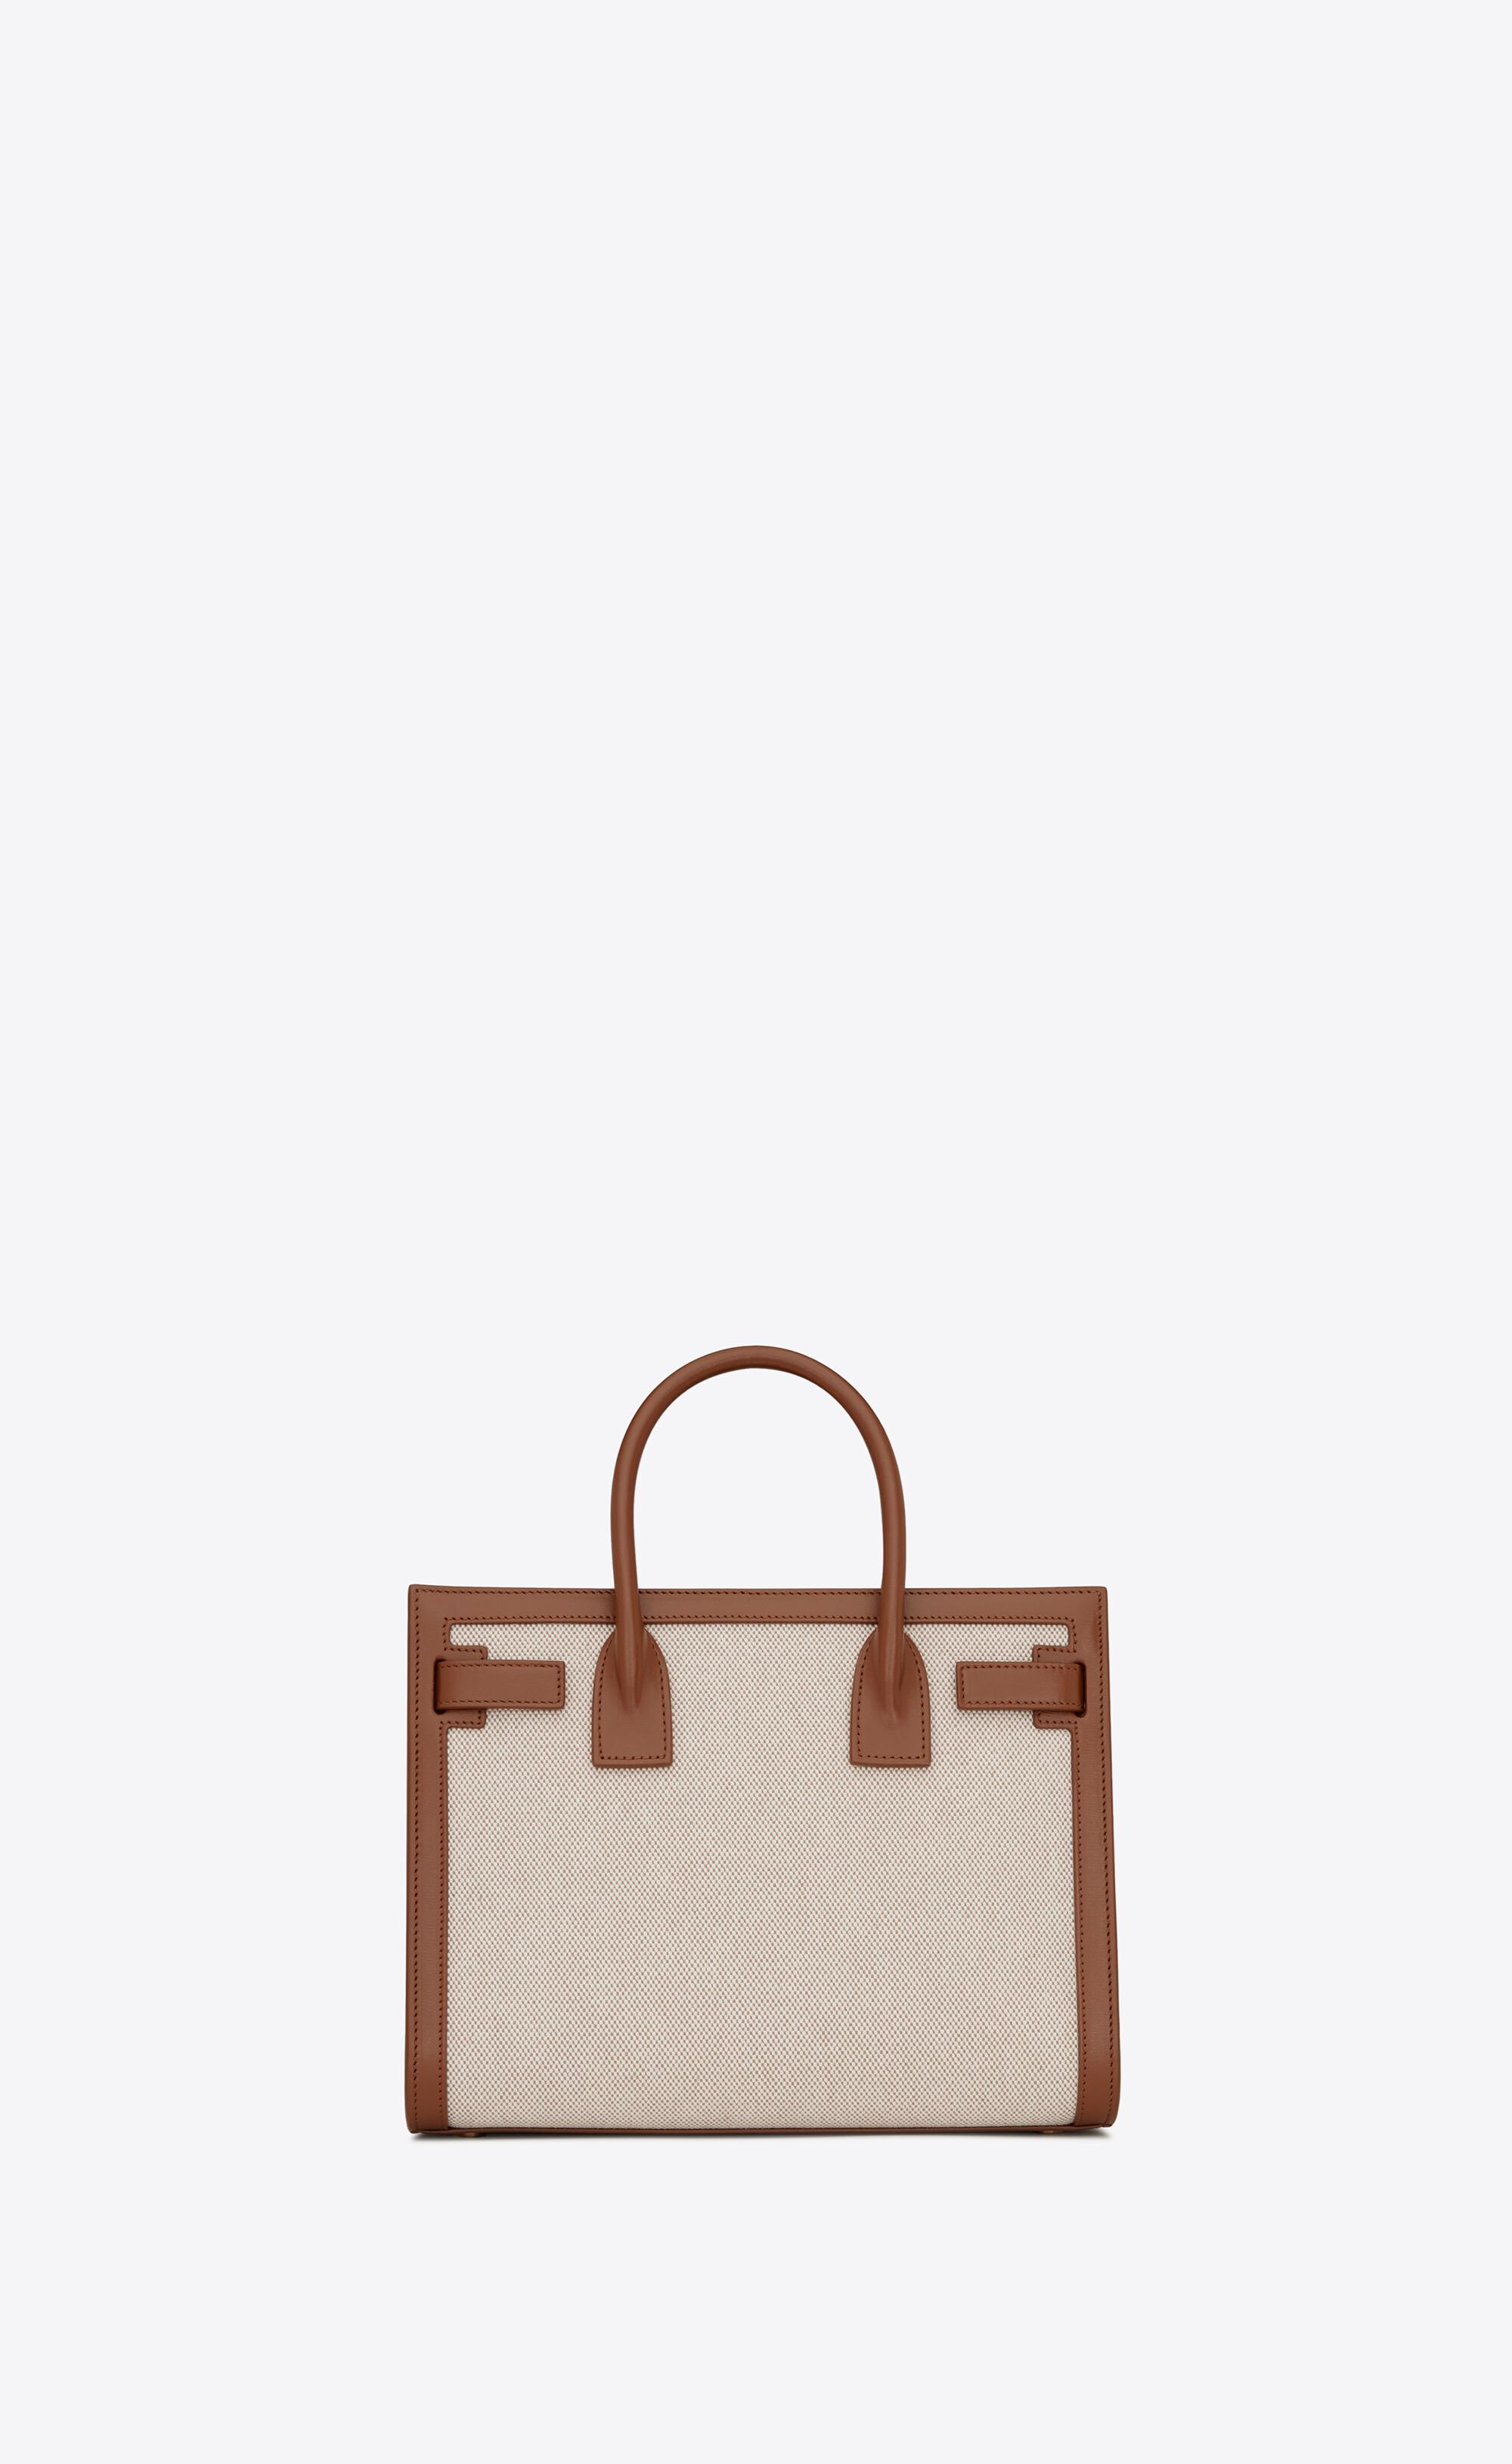 Yves Saint Laurent Sac De Jour Nano Smooth Shoulder Bag